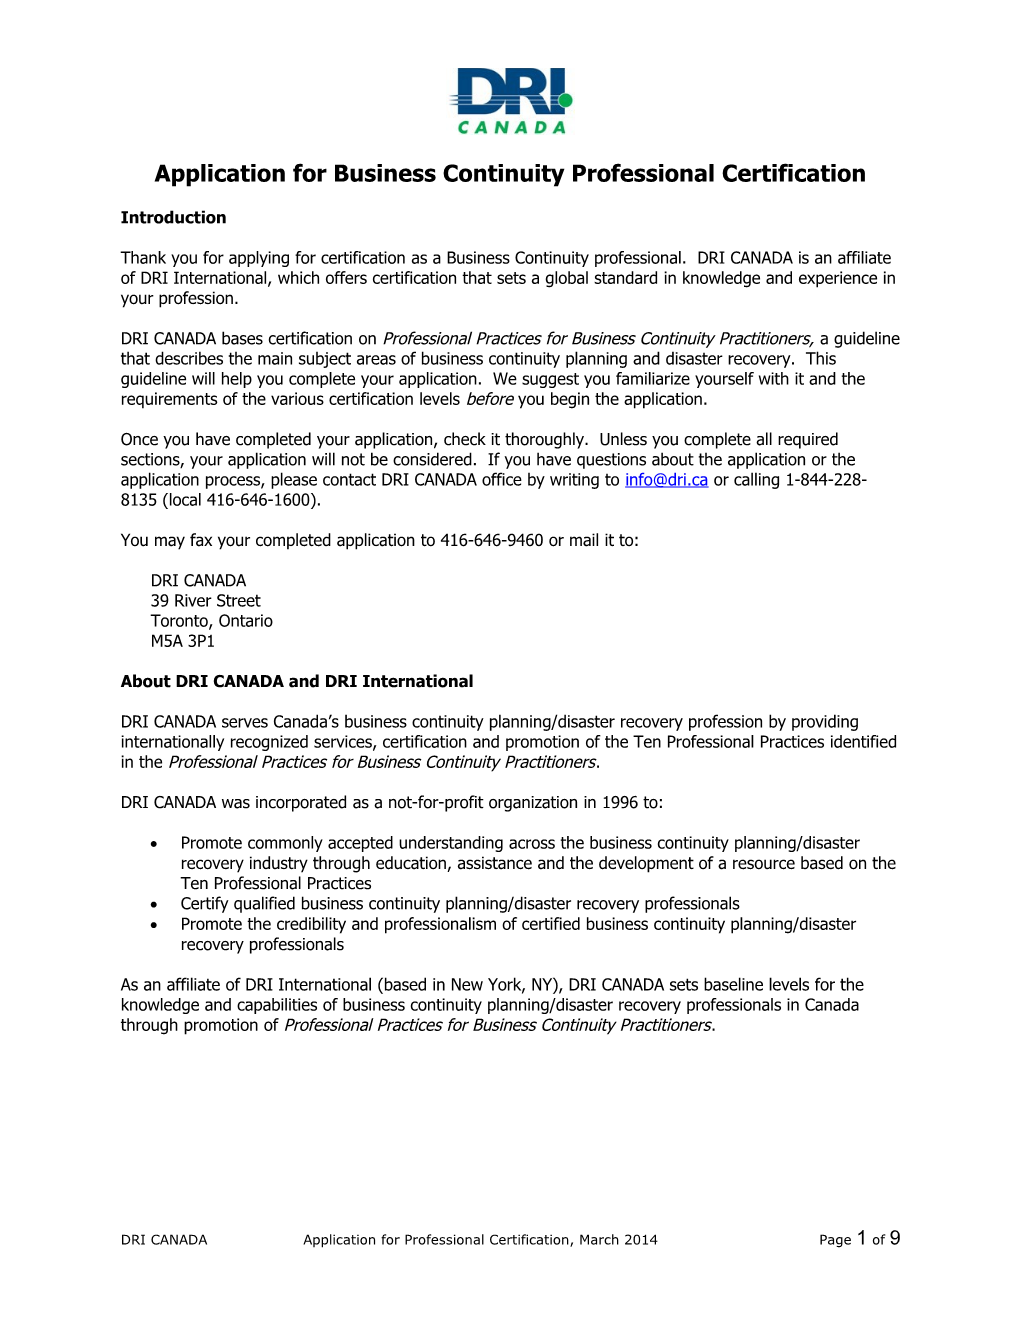 DRAFT DRI International Application for Professional Certification Form